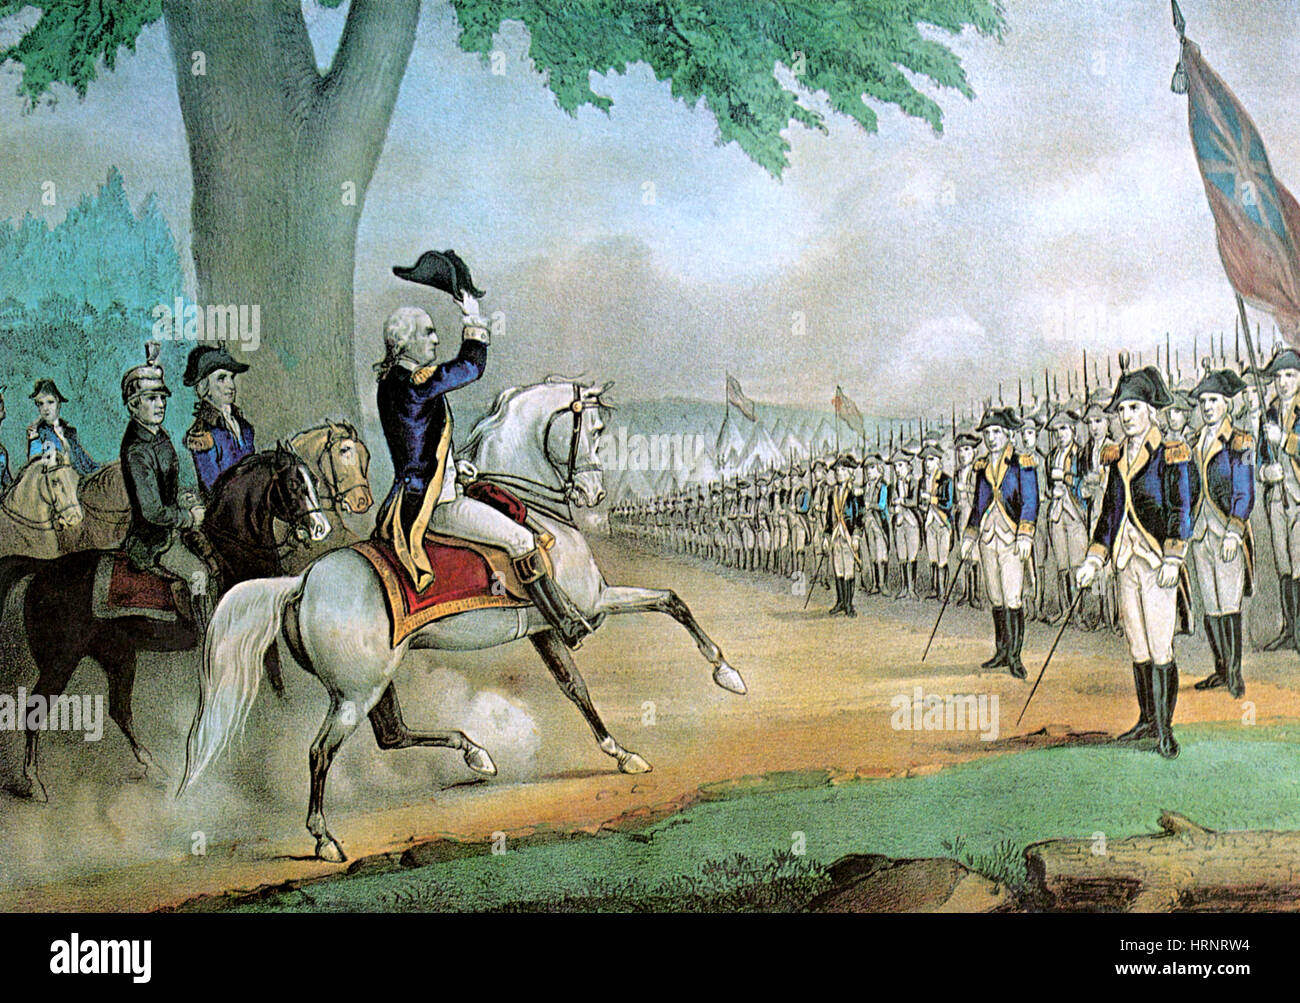 George Washington Taking Command of Army, 1775 Stock Photo - Alamy